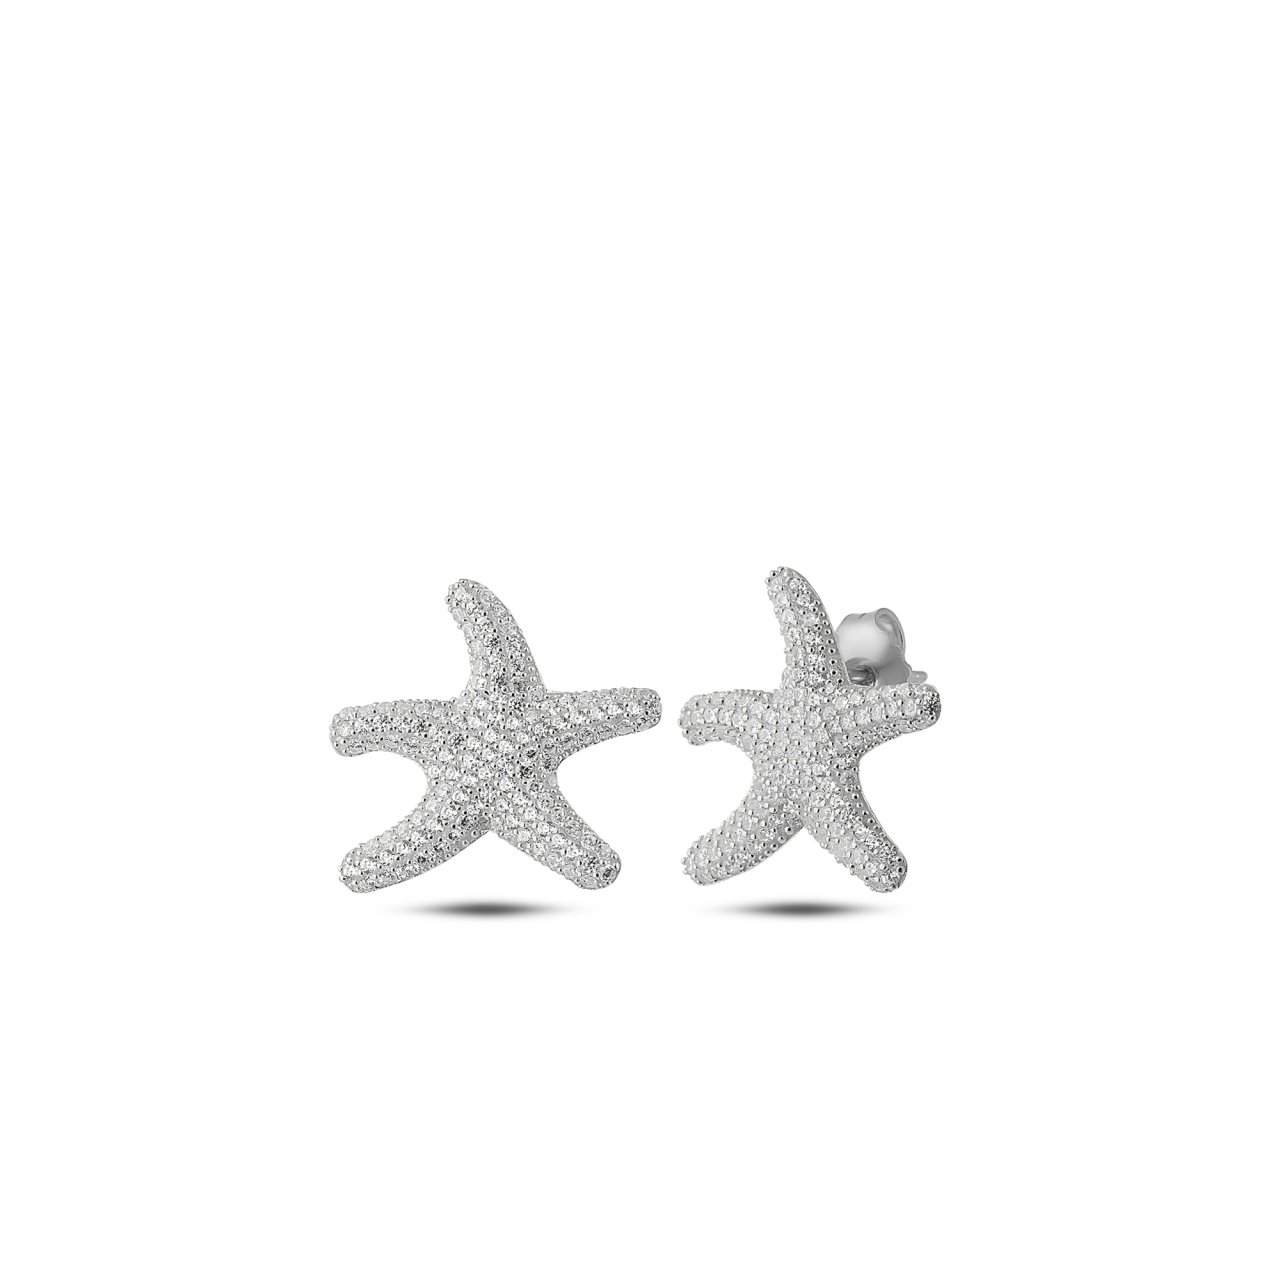 Mini Sea Star Earrings